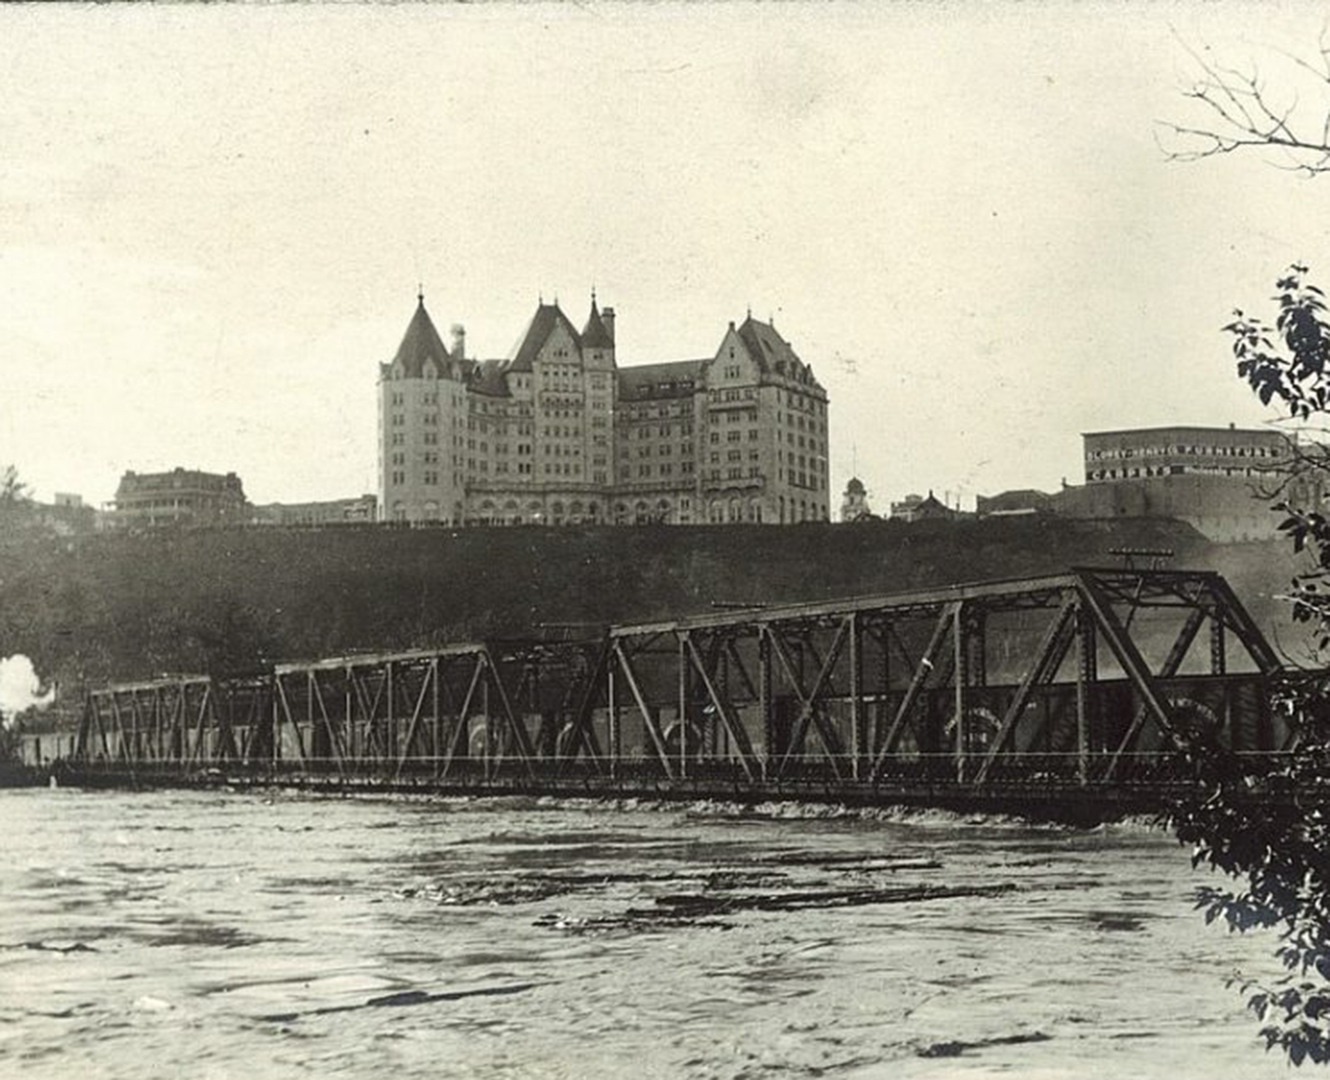 Edmonton Fairmont Hotel Macdonald in 1915